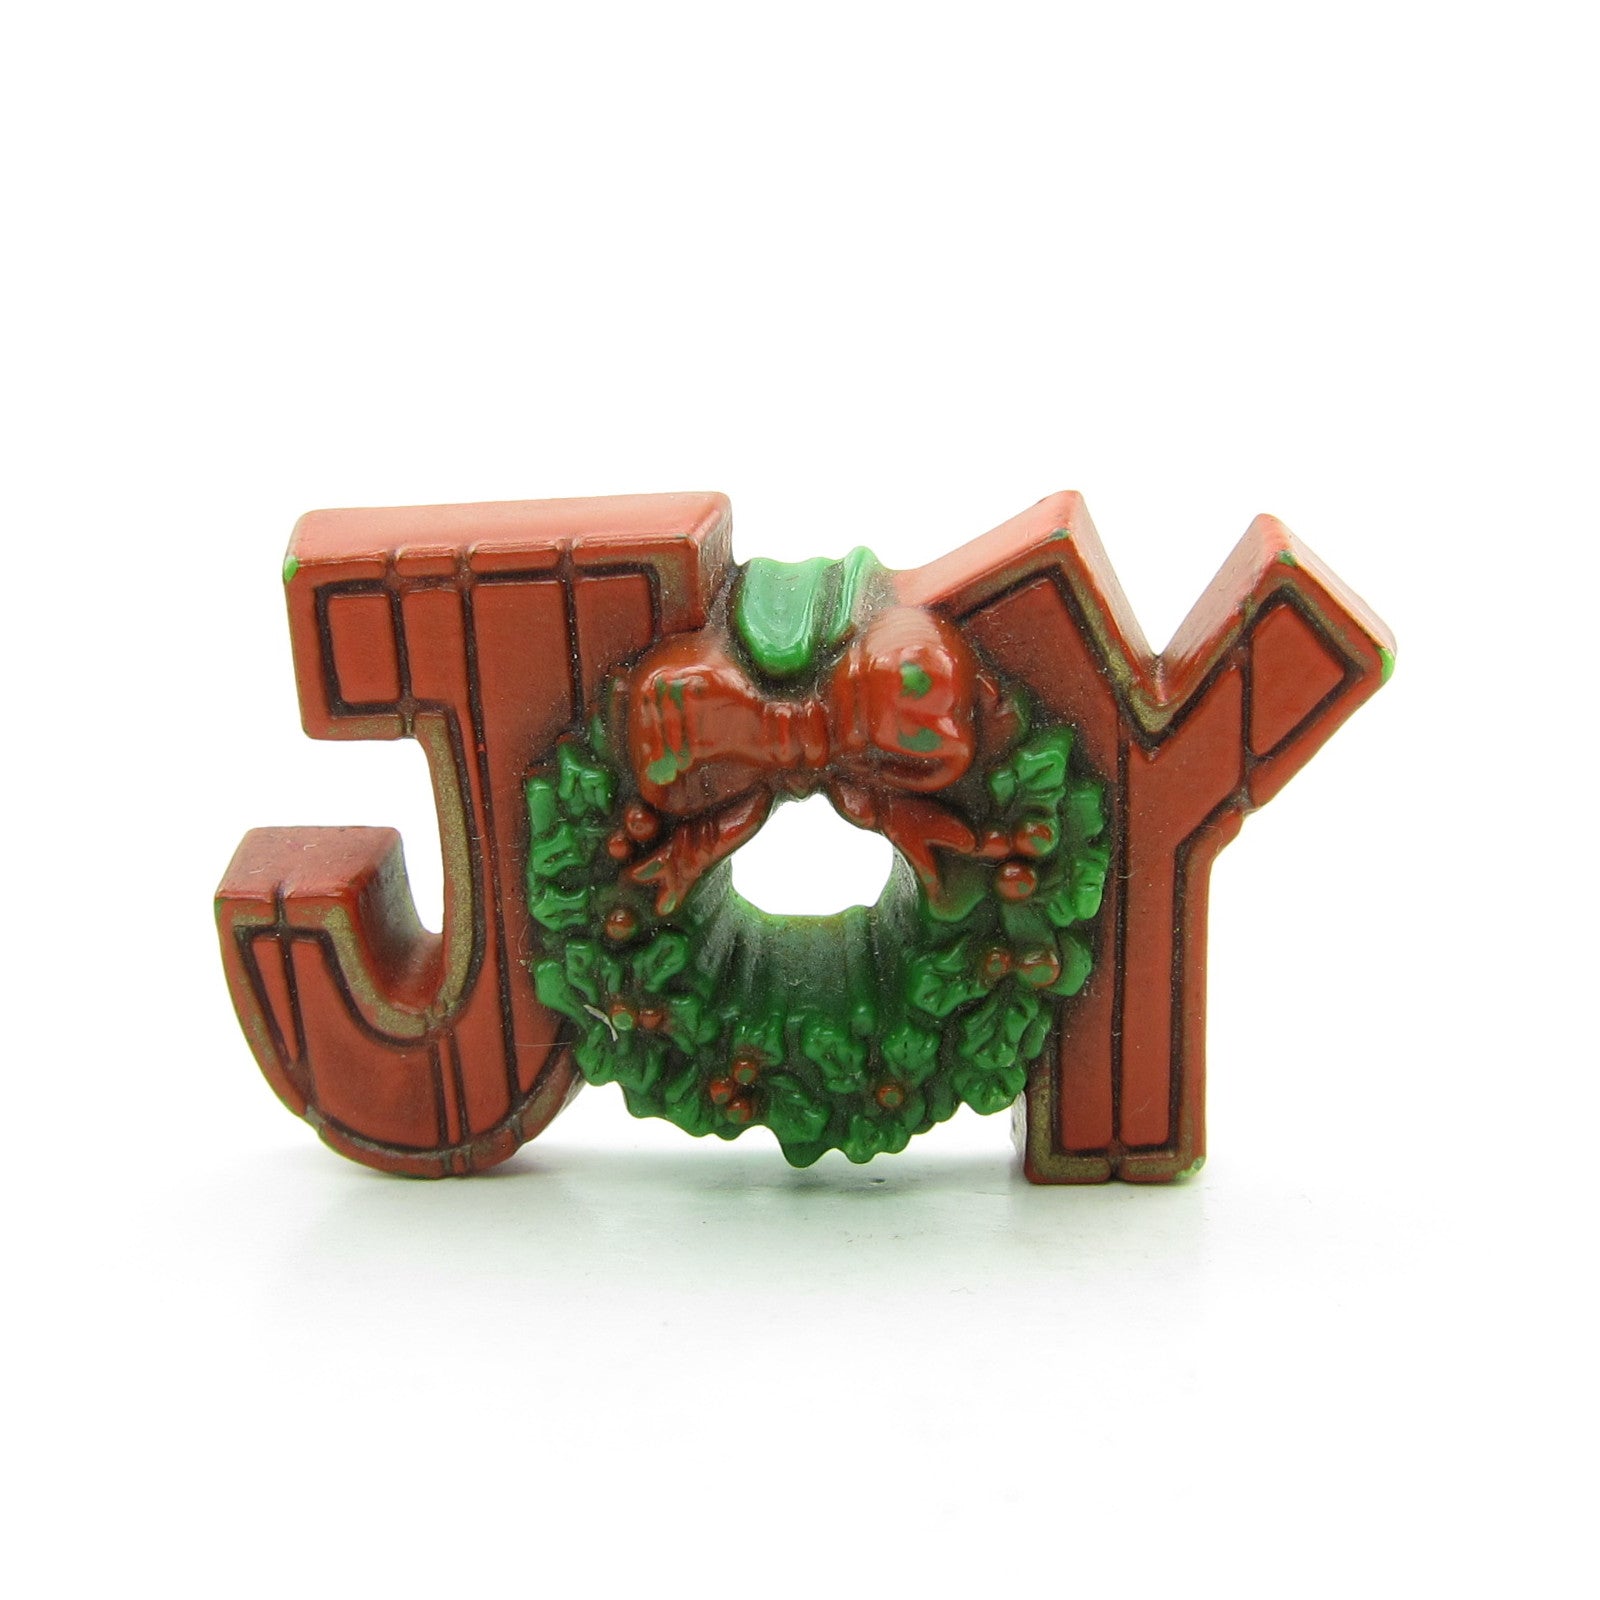 Joy Christmas sign pin with wreath